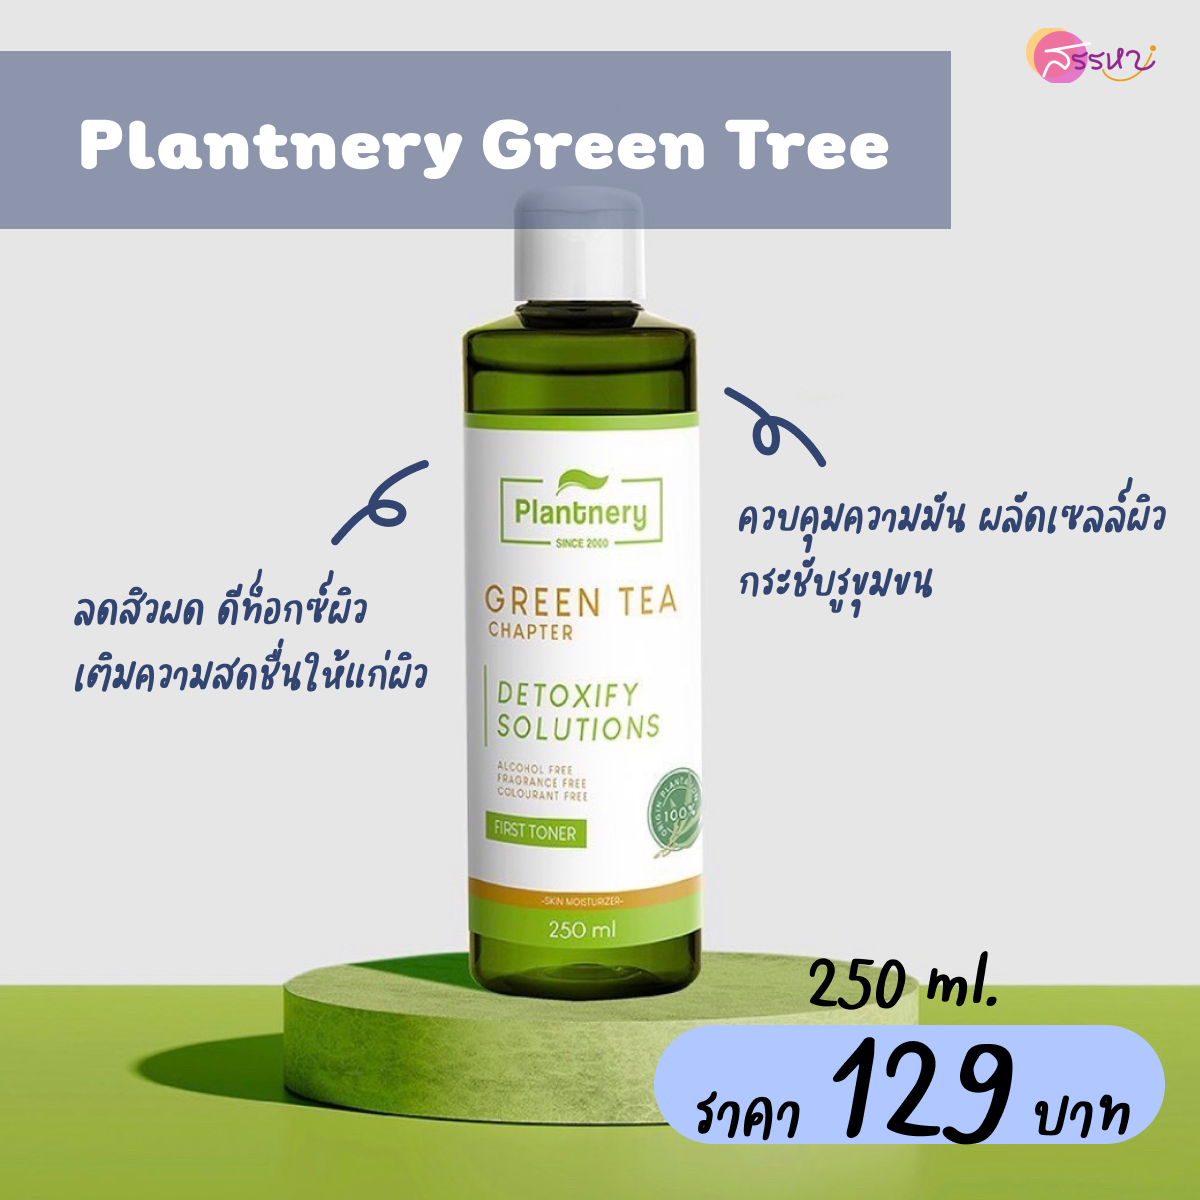 Plantnery Green Tree